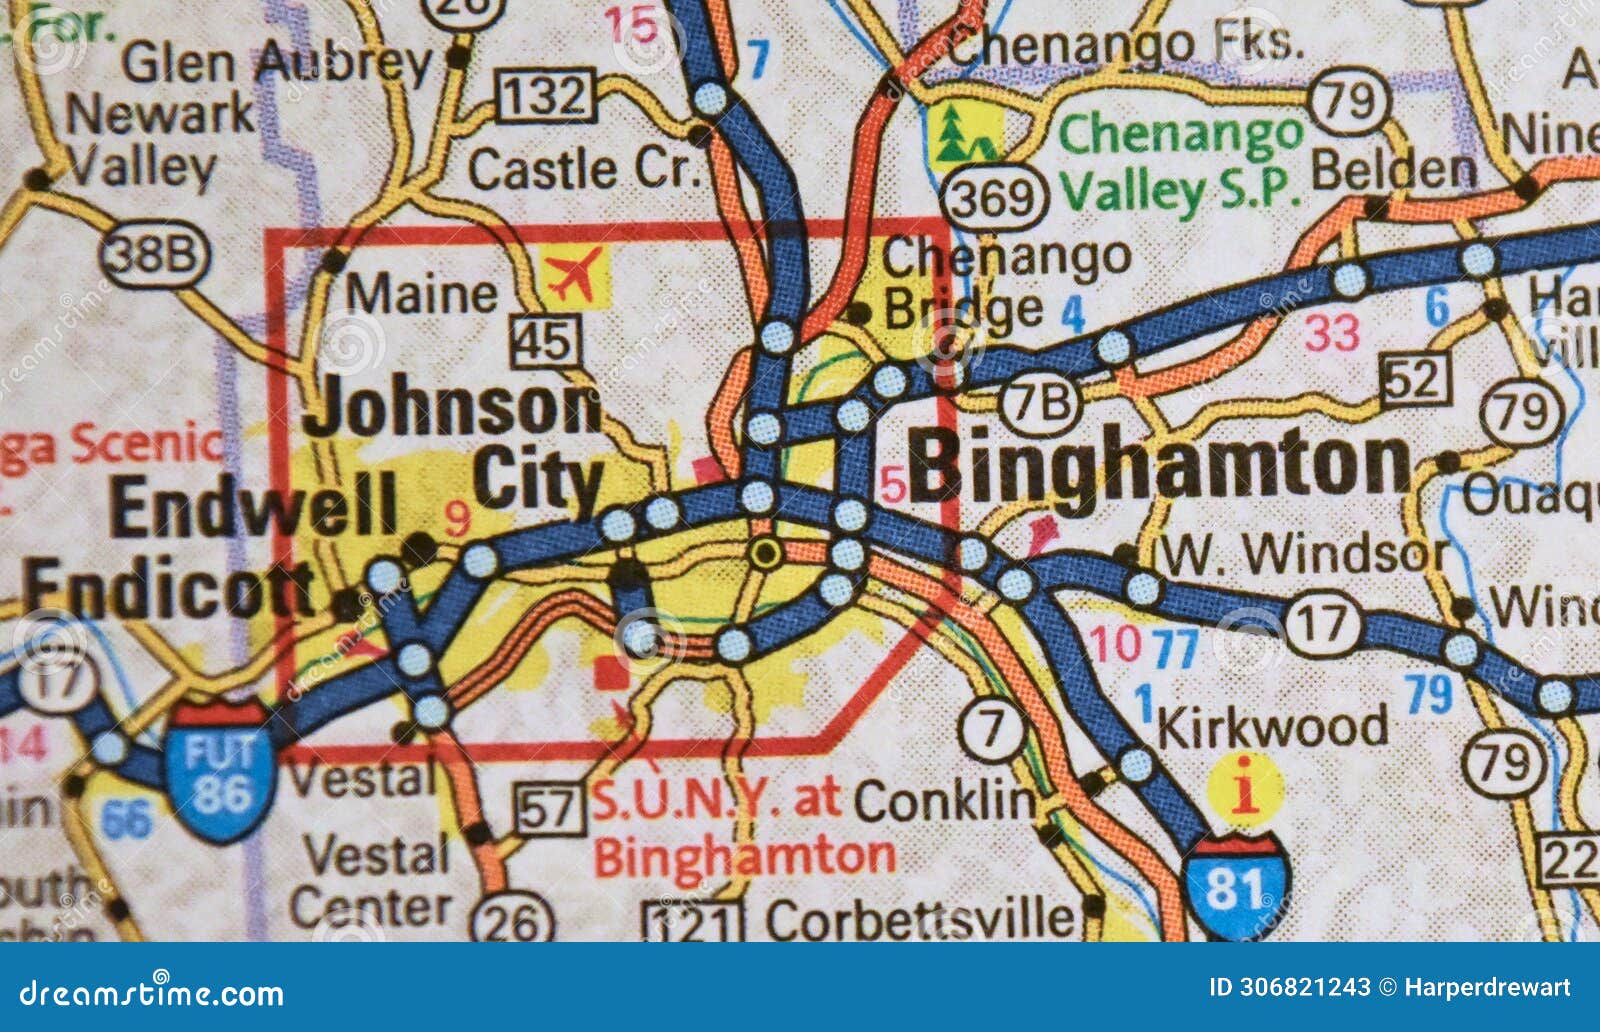 map image of binghamton, new york